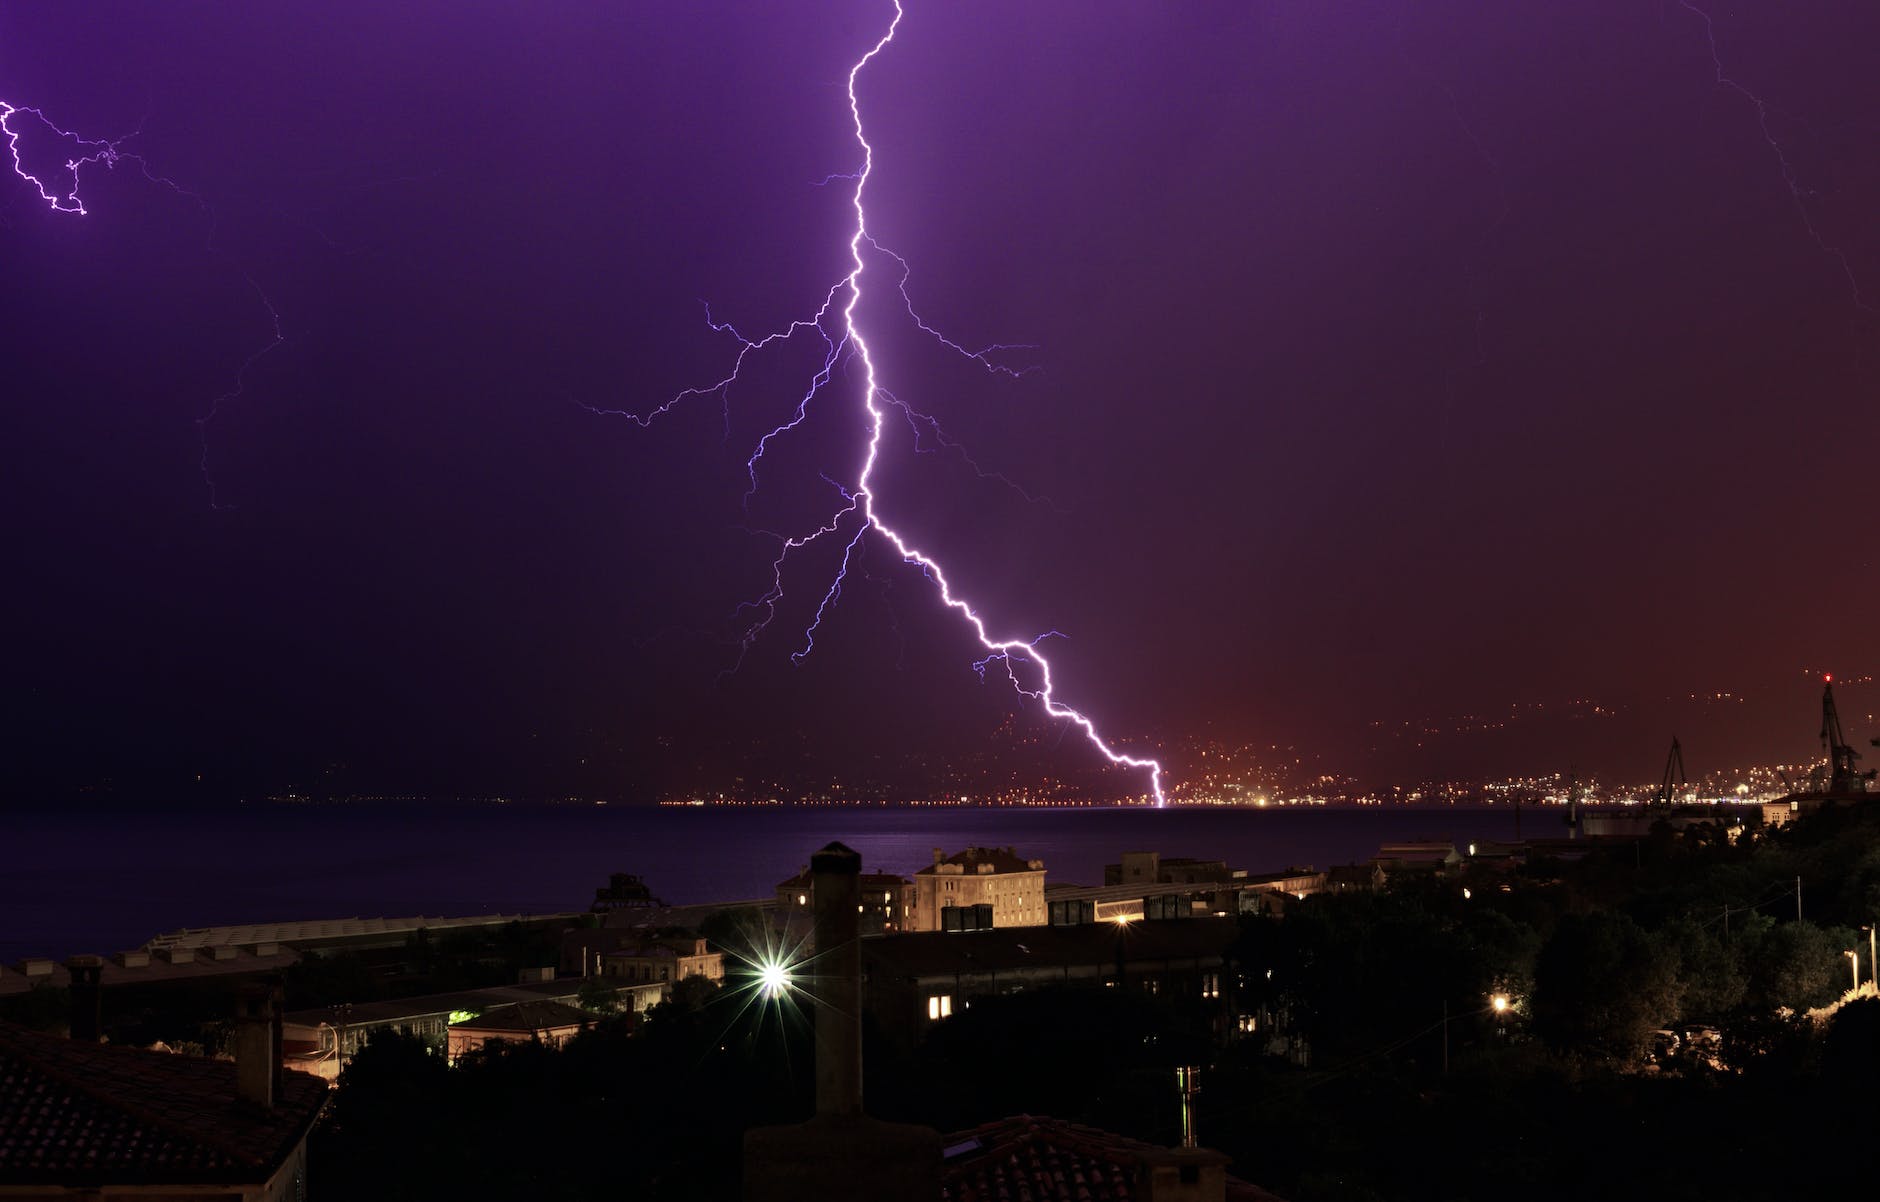 thunderbolt flashing in purple night sky over coastal town